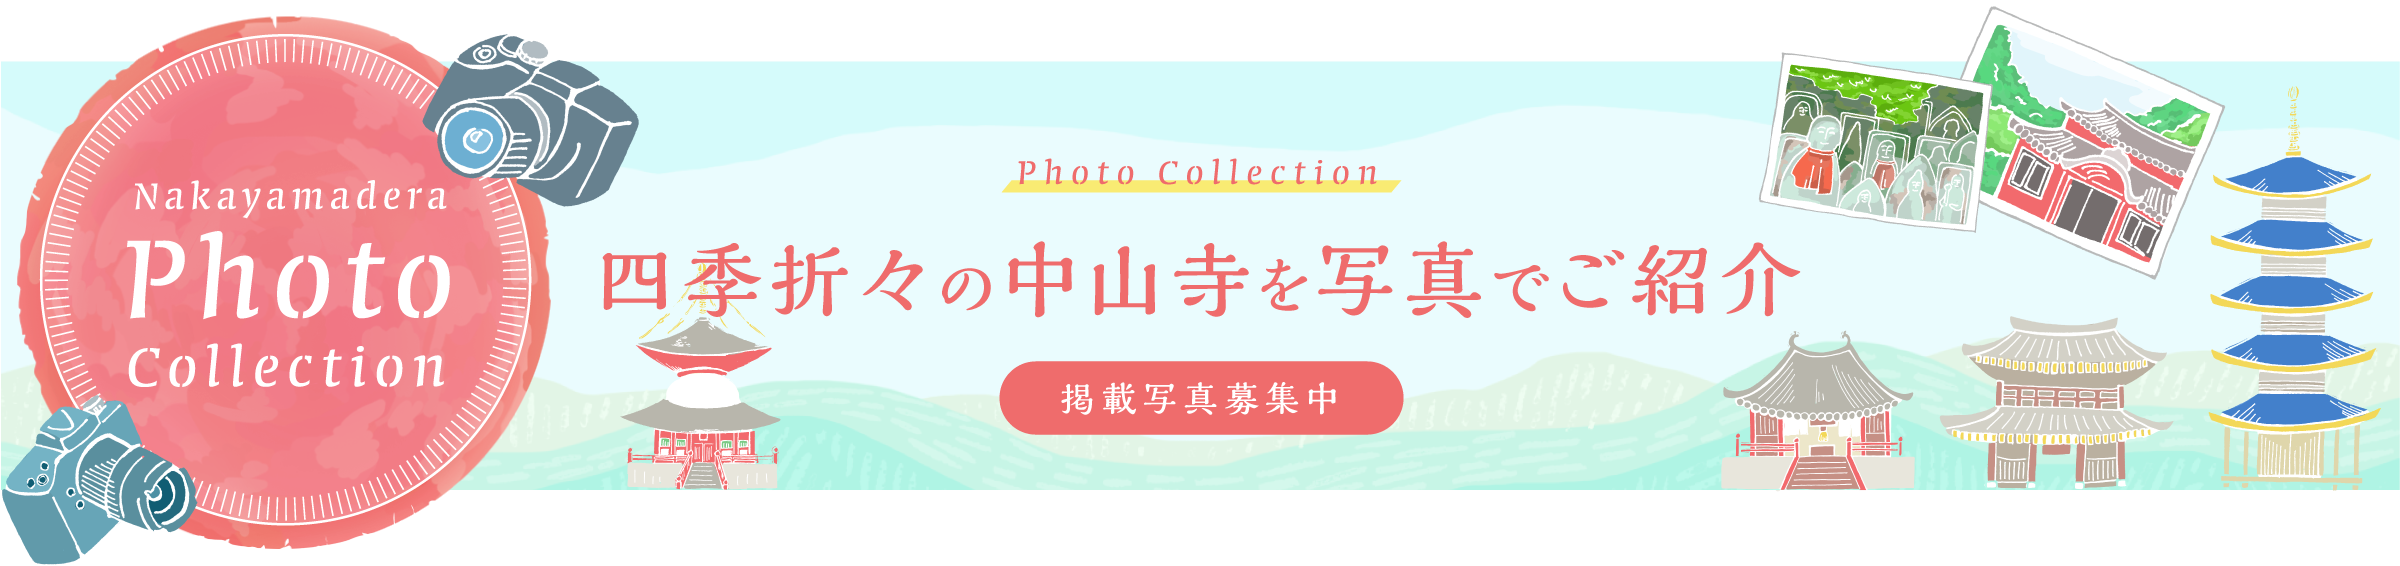 nakayamadera photo collection